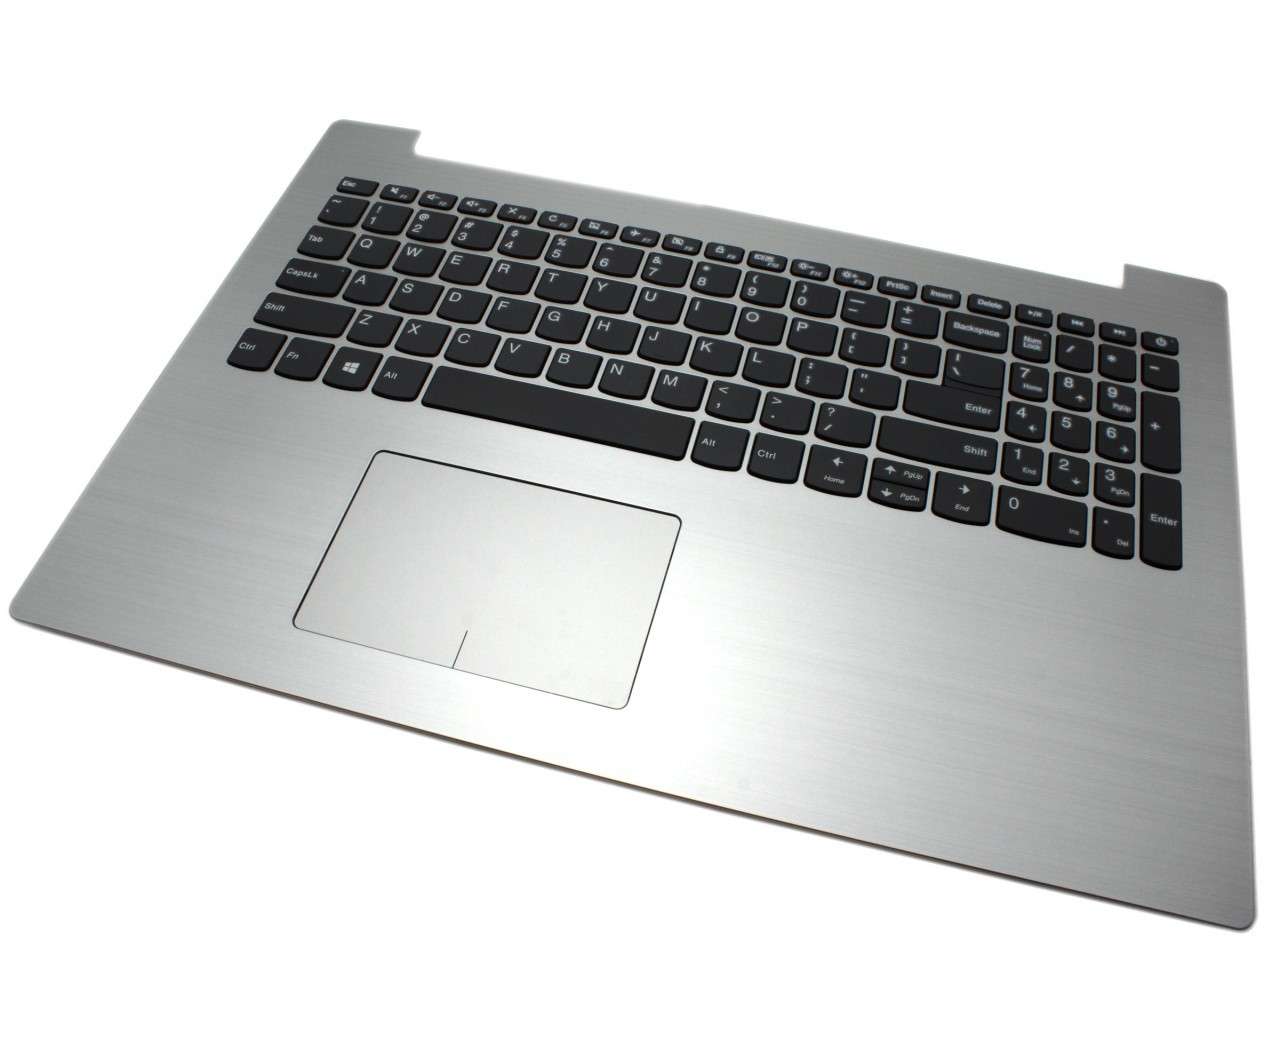 Tastatura Lenovo IdeaPad 320-15AST Type 80XV Gri cu Palmrest Argintiu si TouchPad